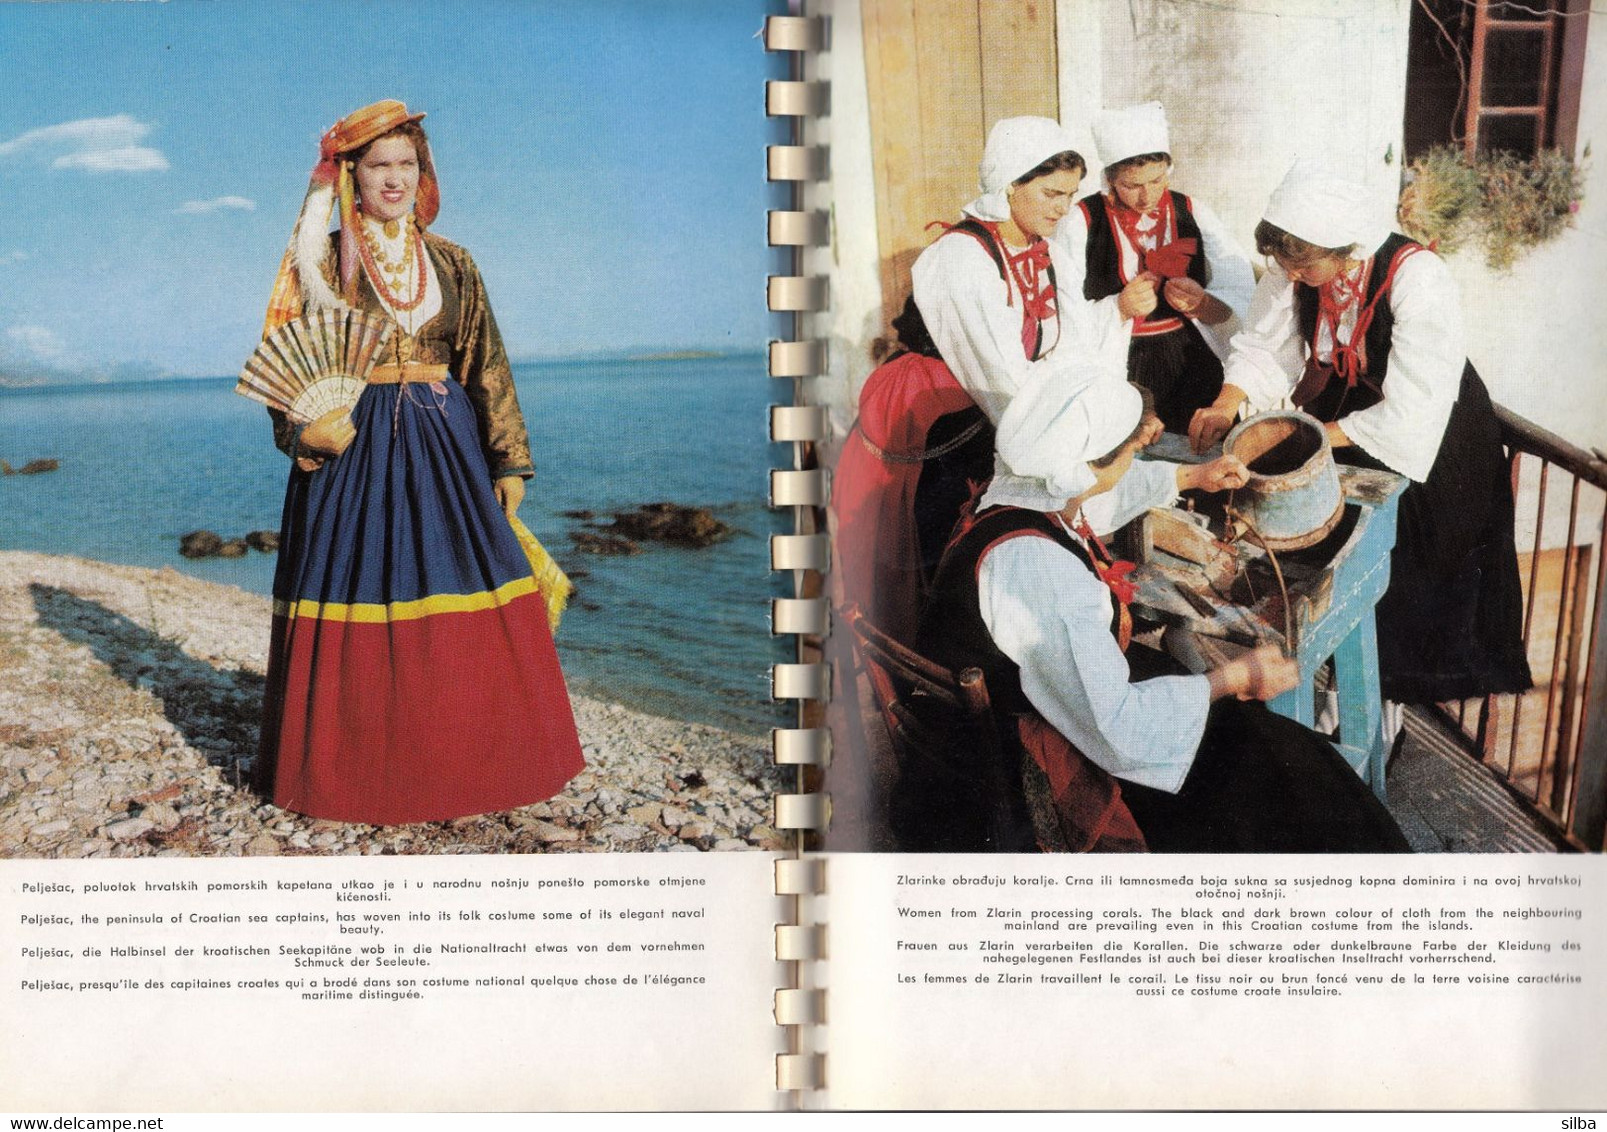 Folk costumes, Slovenia, Kosovo, Croatia, Bosnia, Serbia, Montenegro, Macedonia